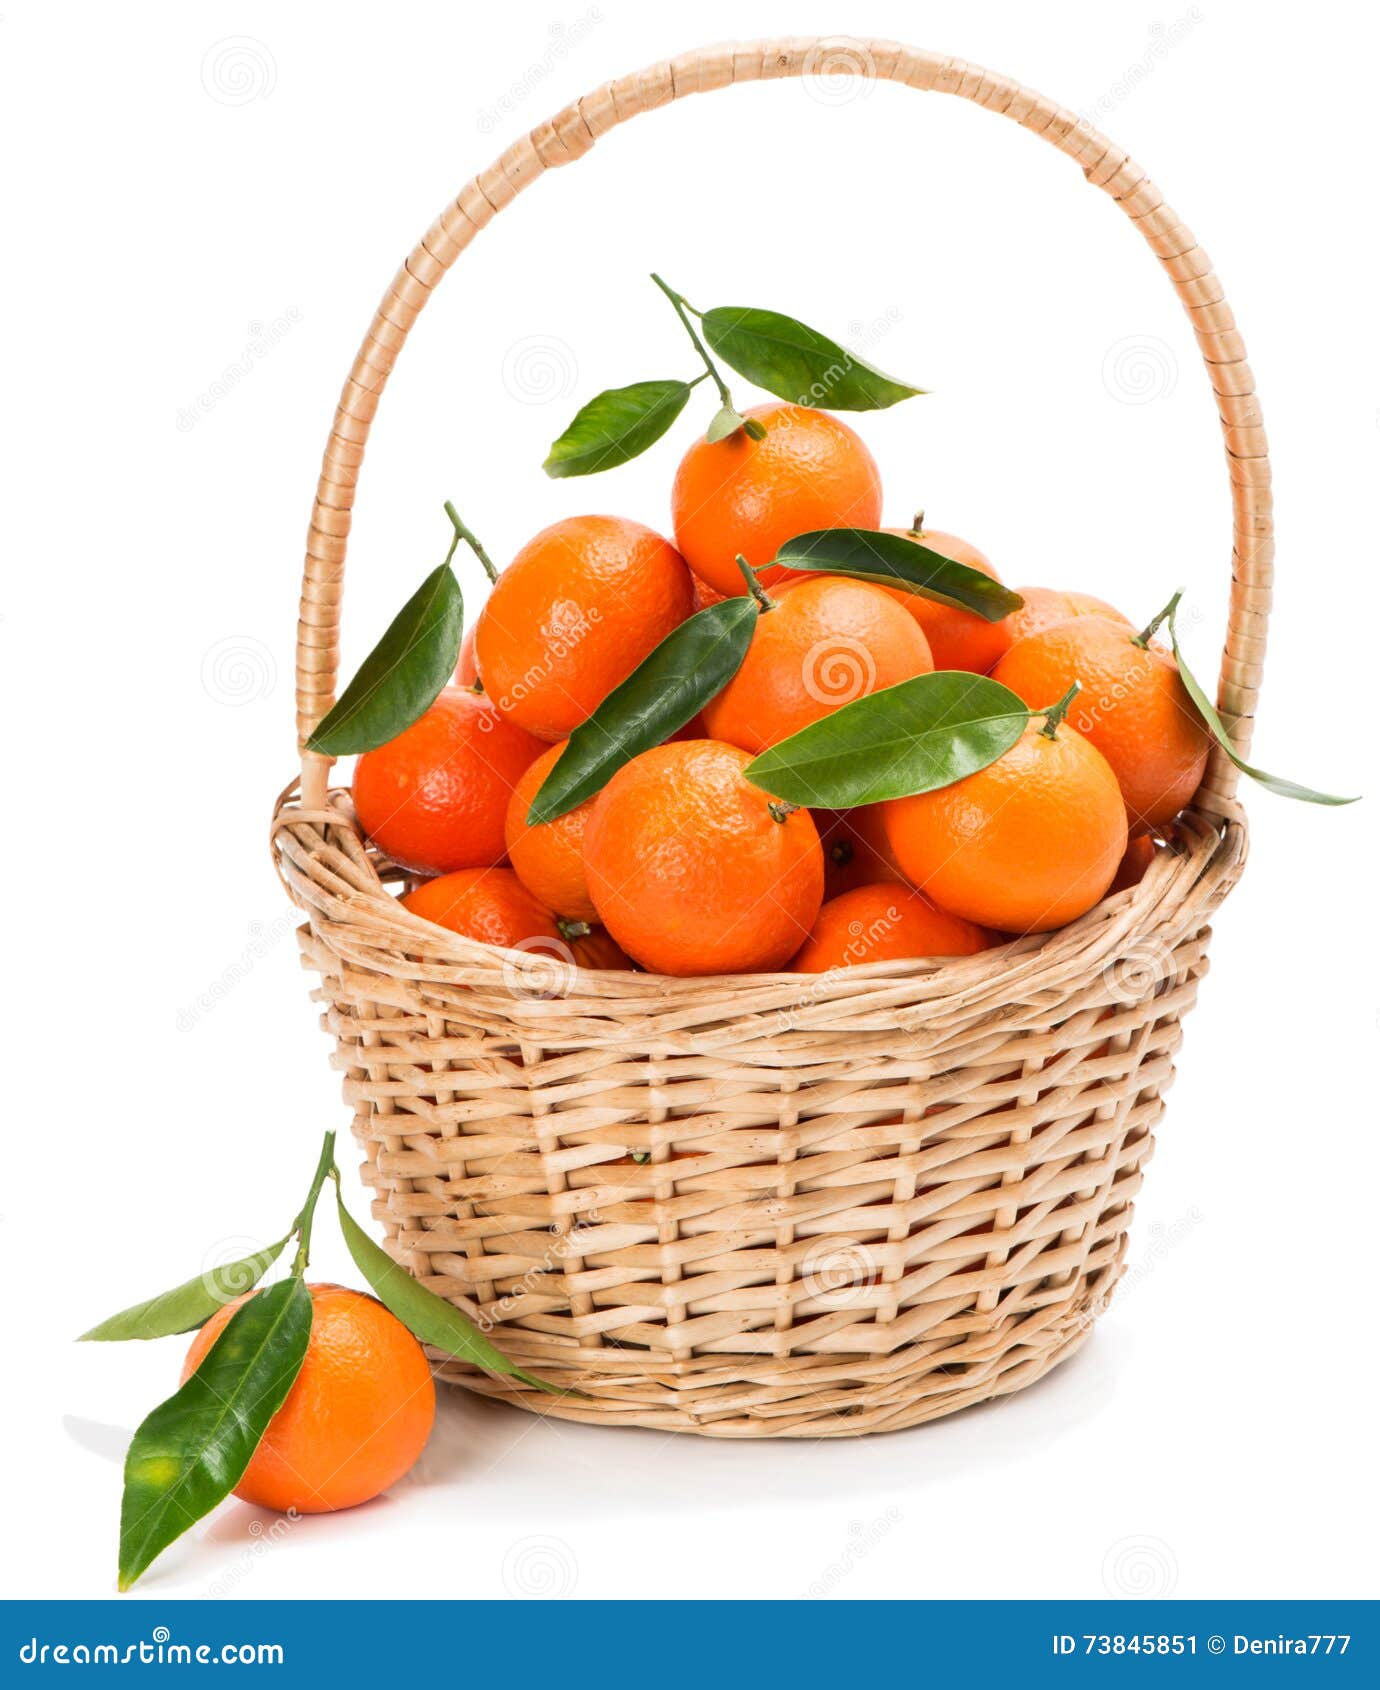 clementine or tangerine in basket.